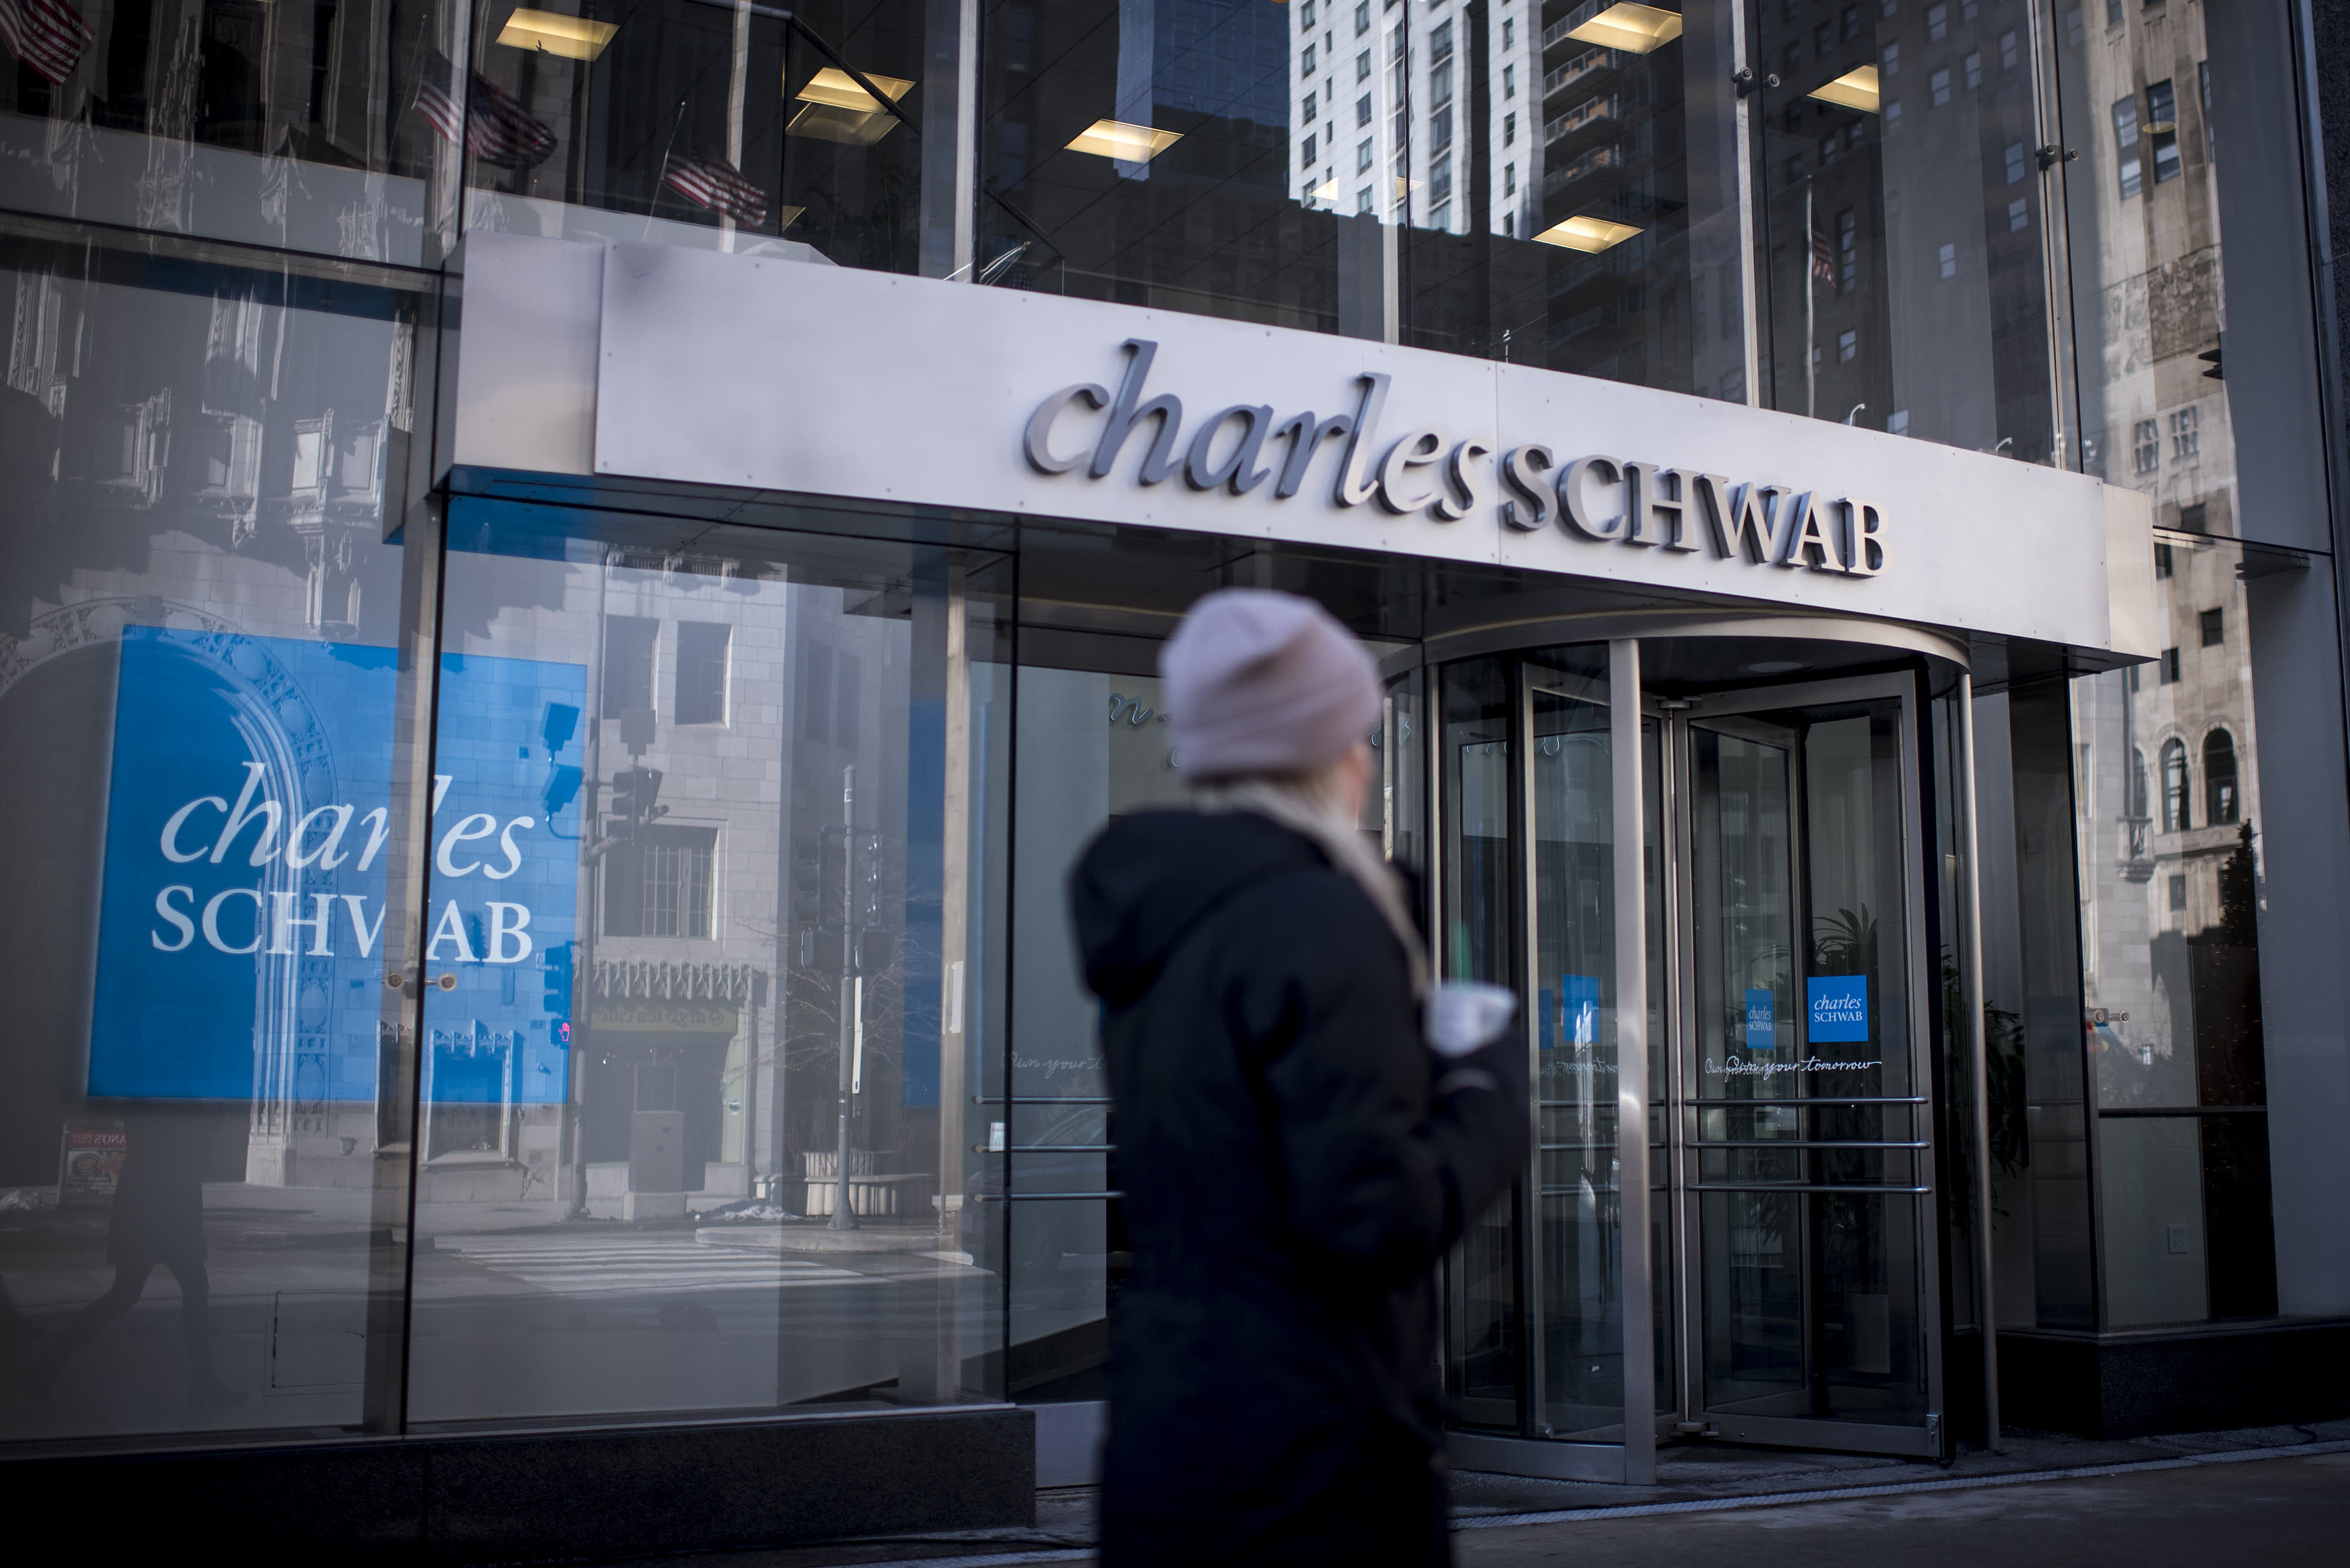 Charles Schwab profit for the fourth quarter of 2020